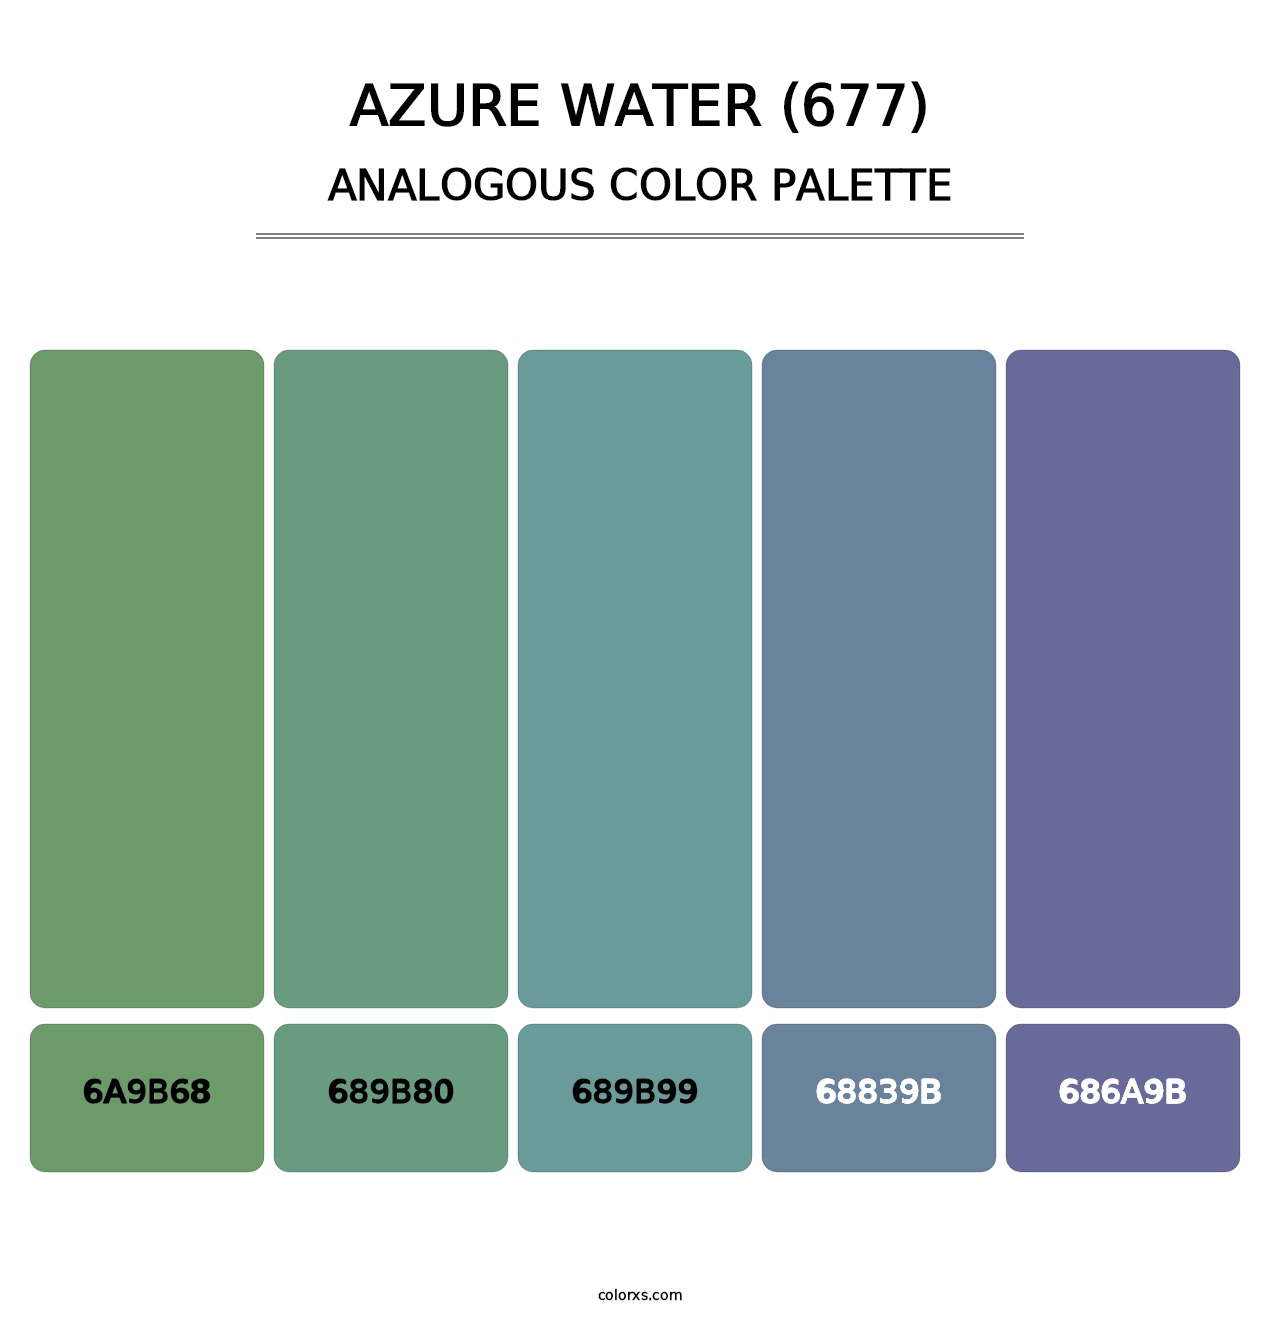 Azure Water (677) - Analogous Color Palette